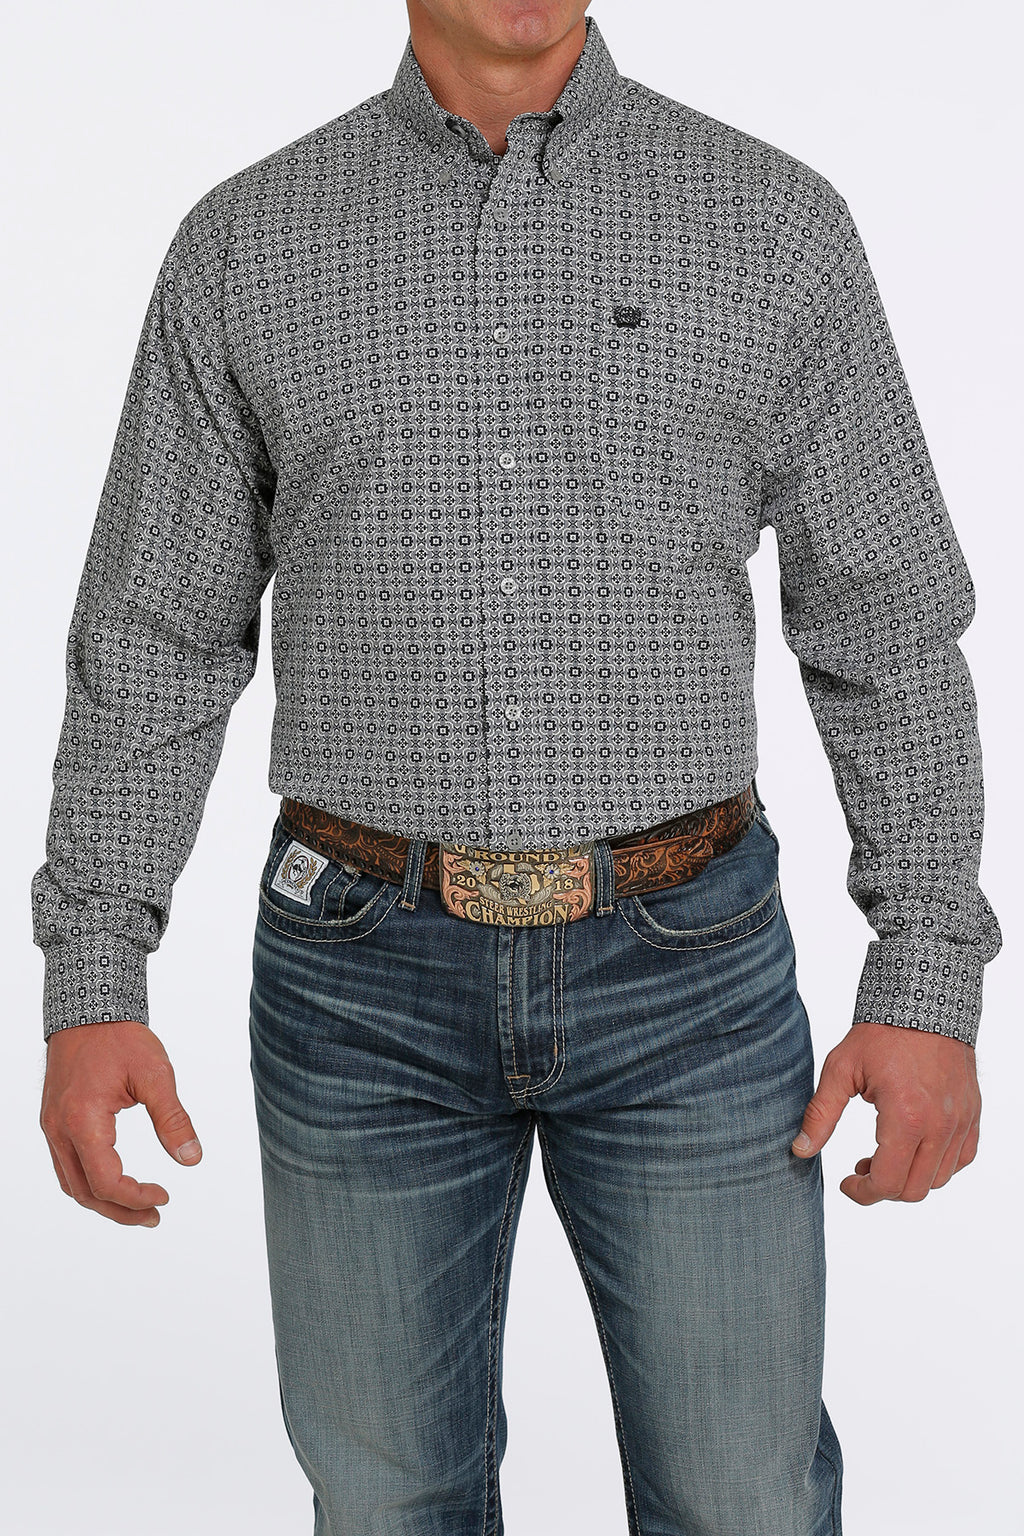 CINCH Men's Gray Button-Down Western Shirt